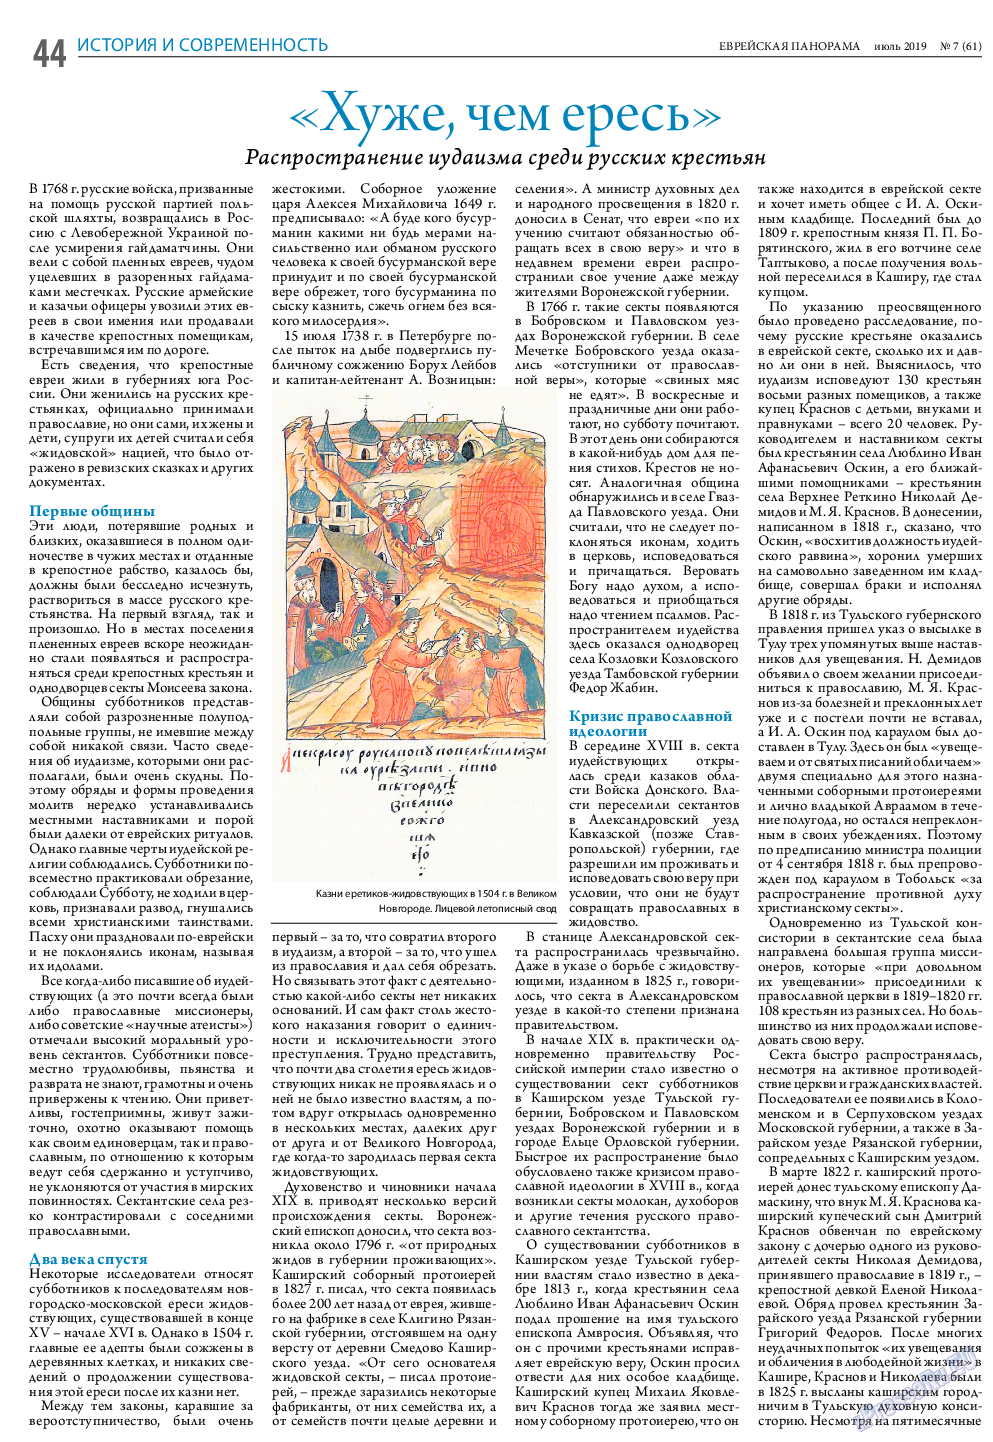 Еврейская панорама, газета. 2019 №7 стр.44